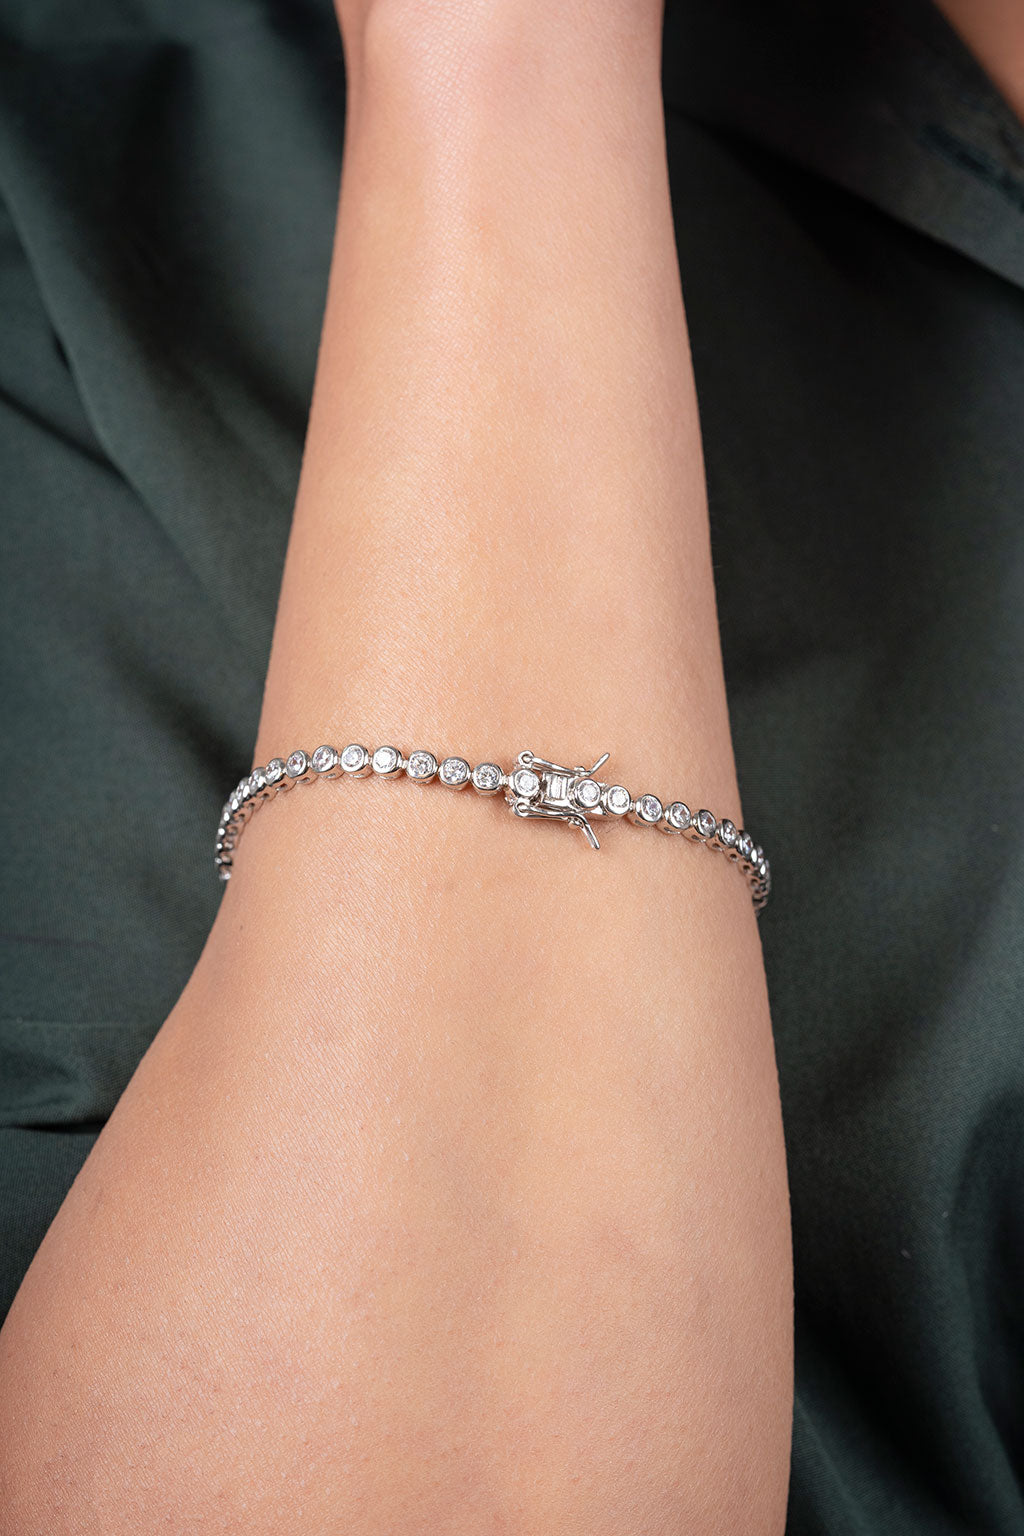 Stunning 925 Silver Bracelet